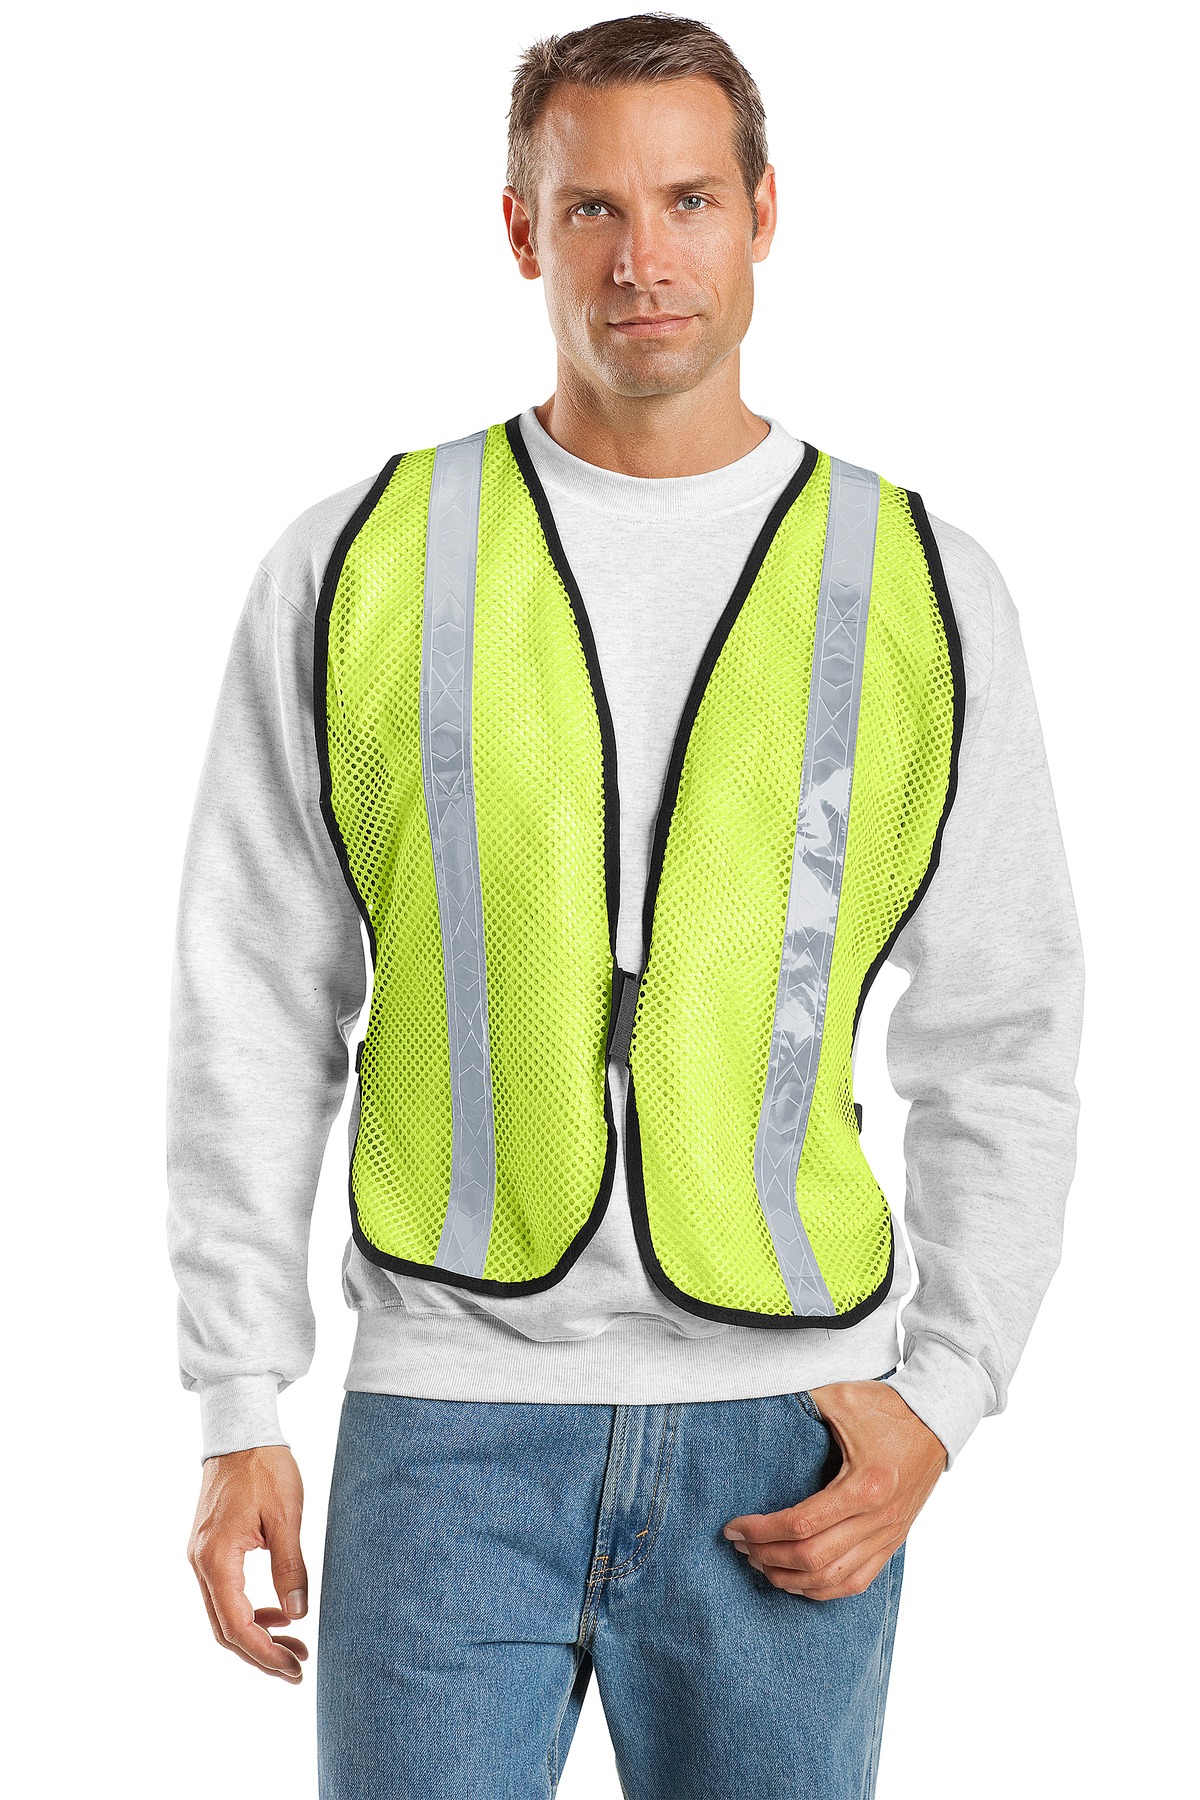 Port Authority Mesh Enhanced Visibility Vest. SV02